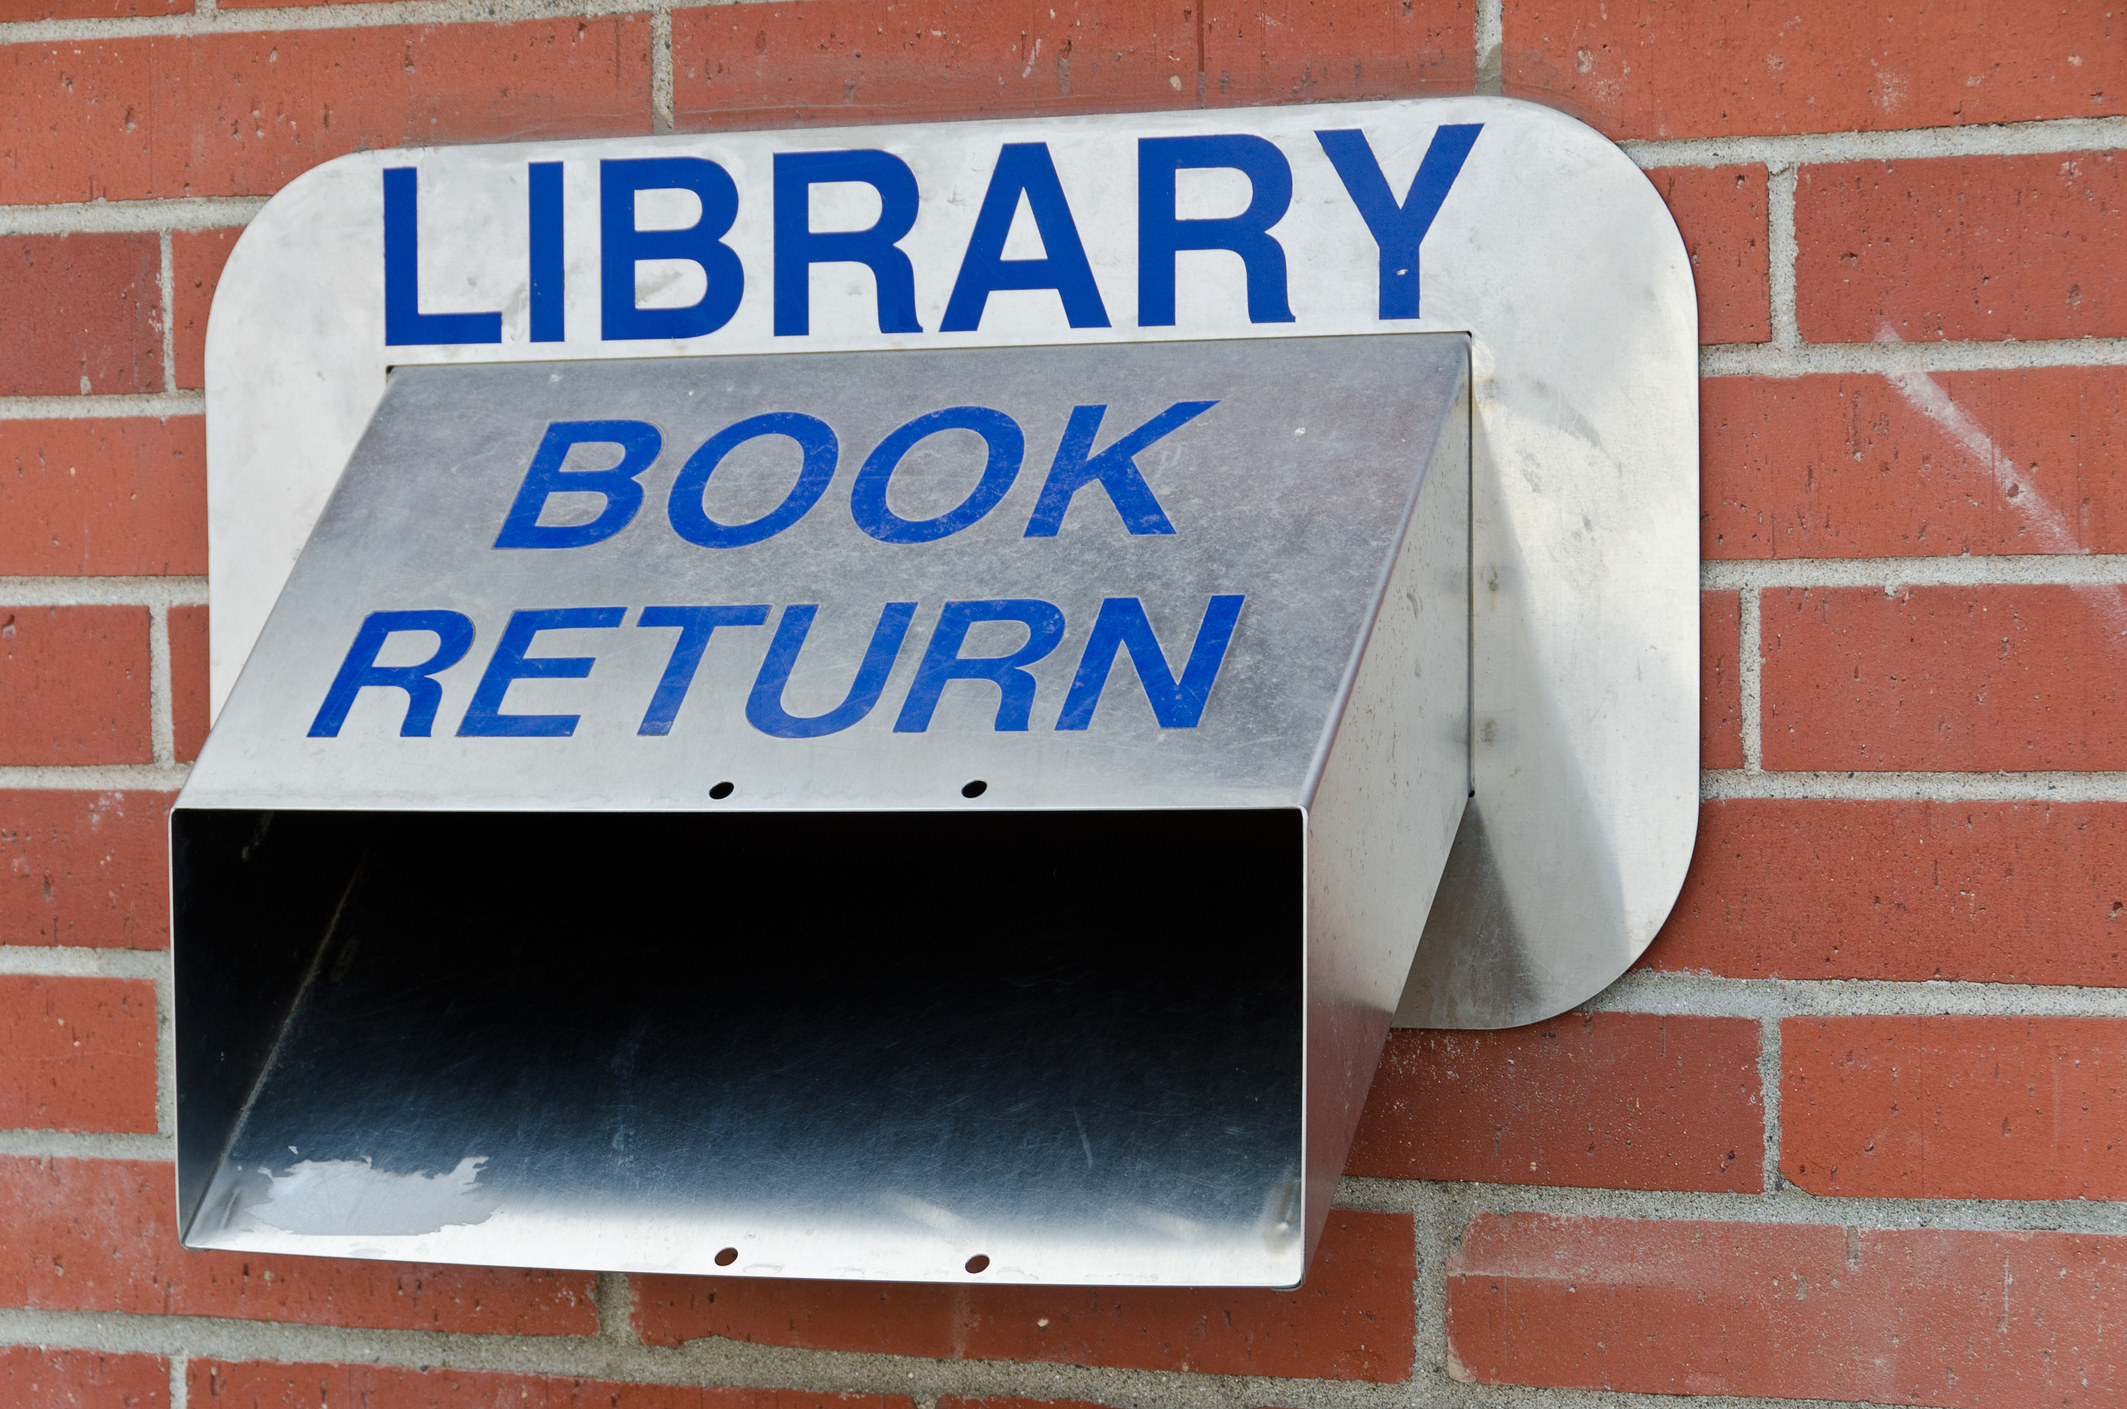 A meta book return slot outside a library